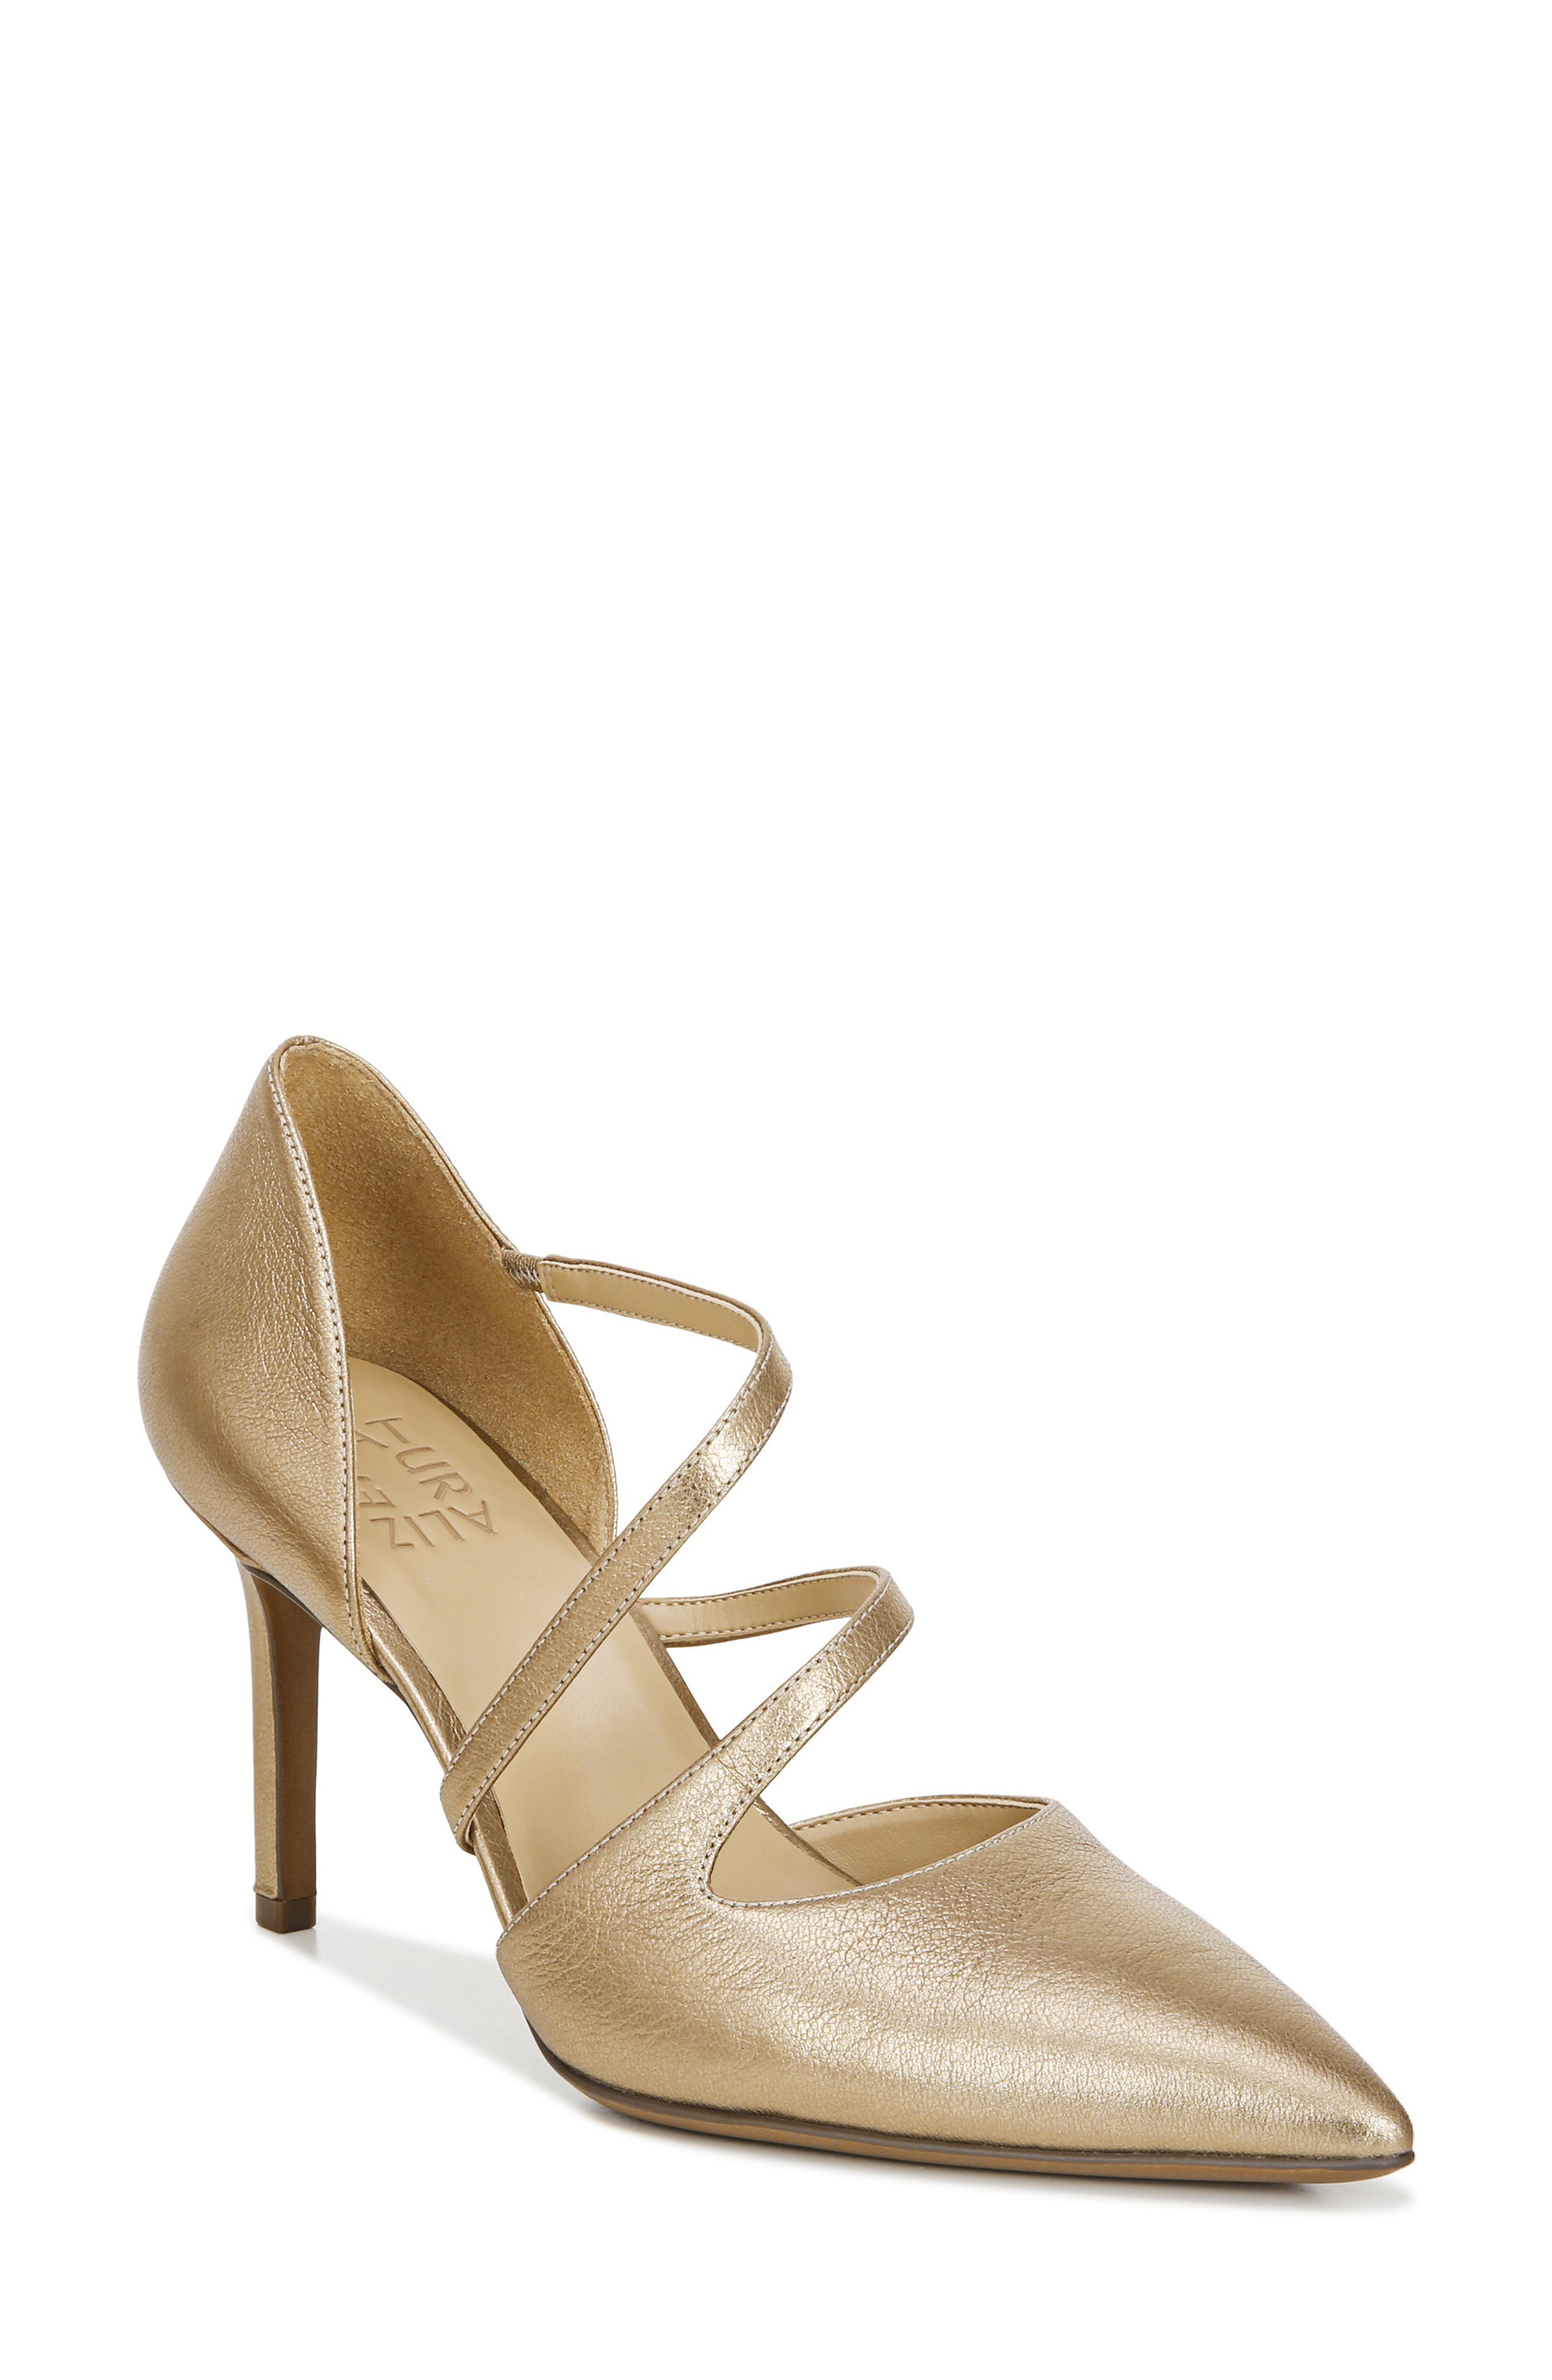 gold heels and pumps